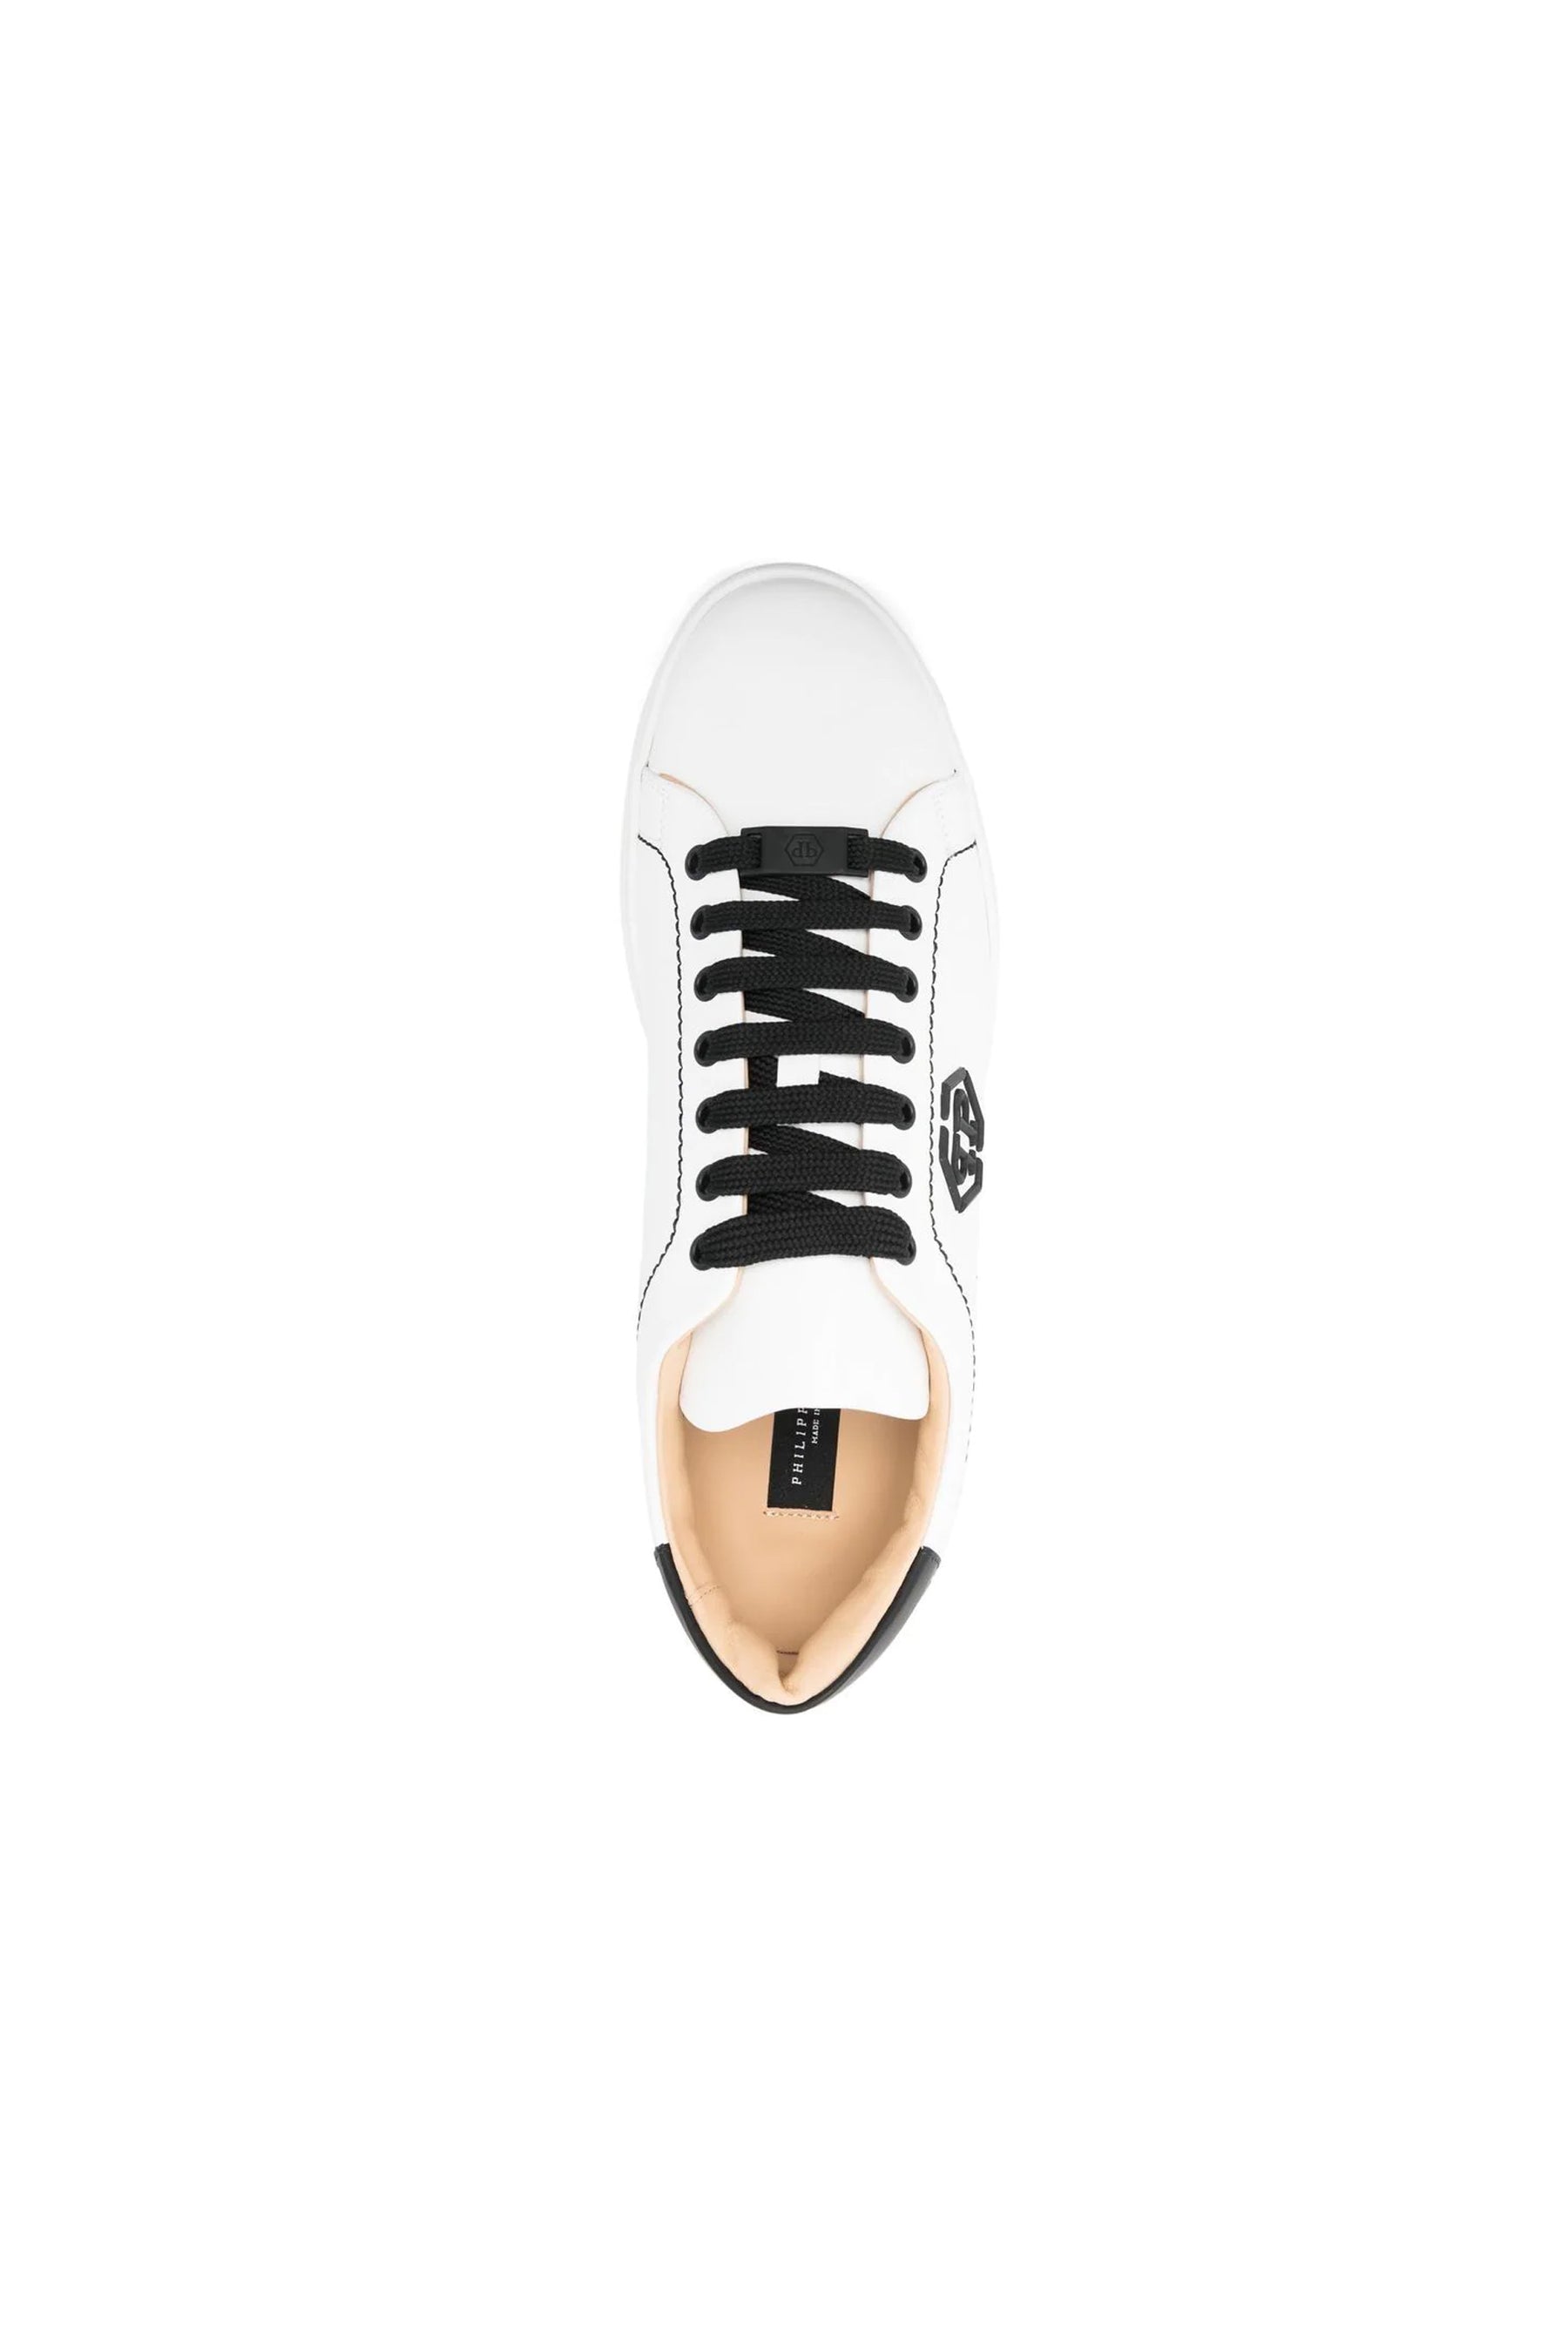 Philipp Plein low-top leather sneakers black white